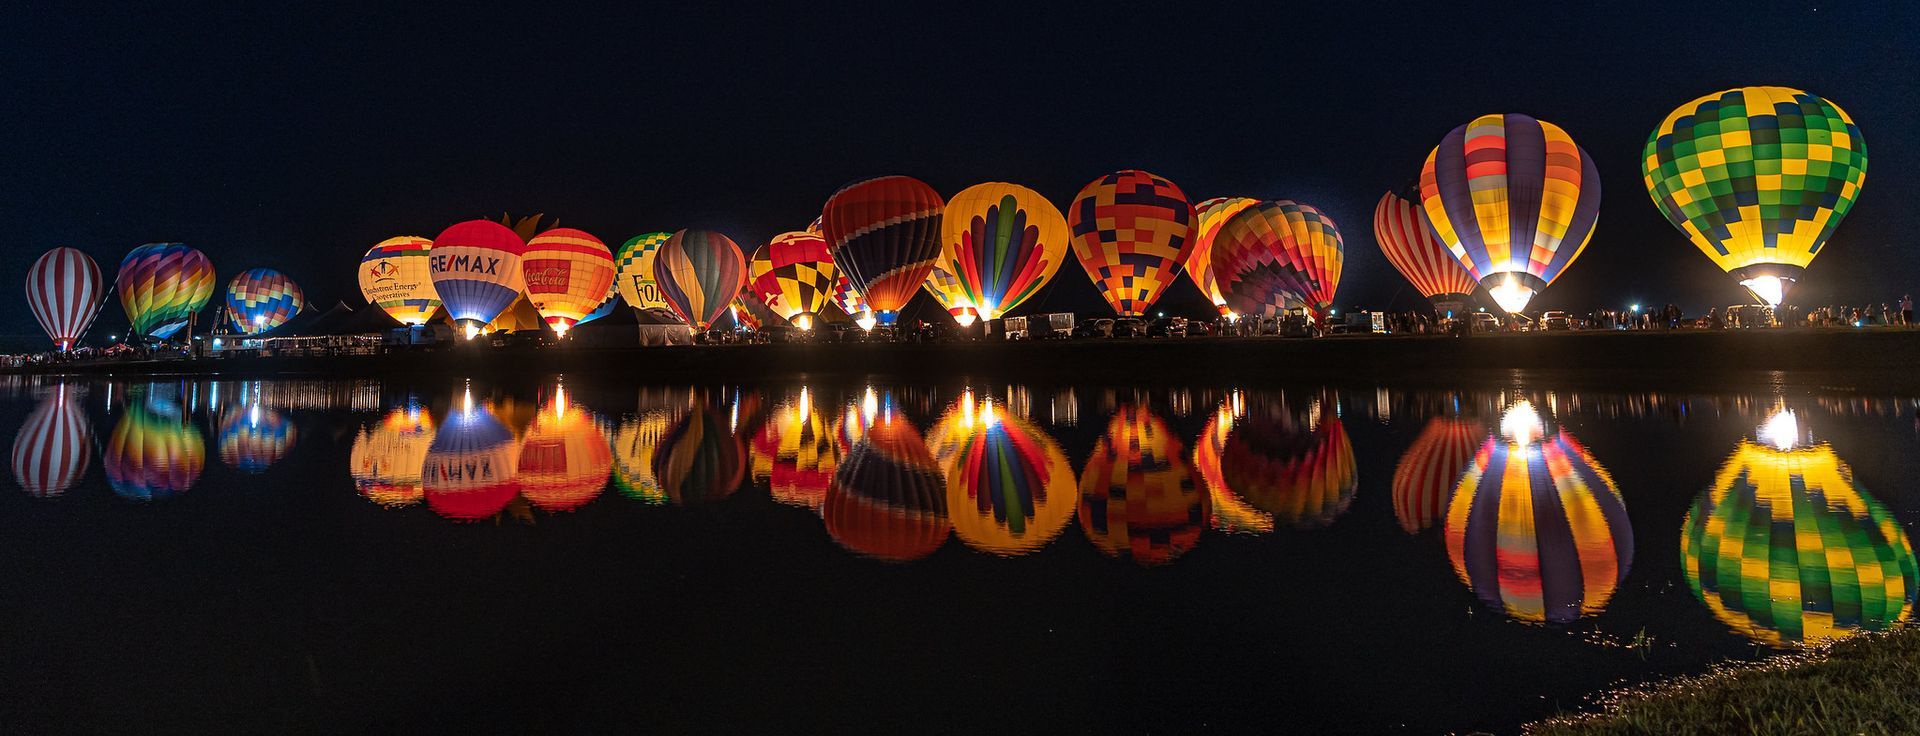 Gulf Coast Hot Air Balloon Festival at OWA in Foley, Balloon Glow